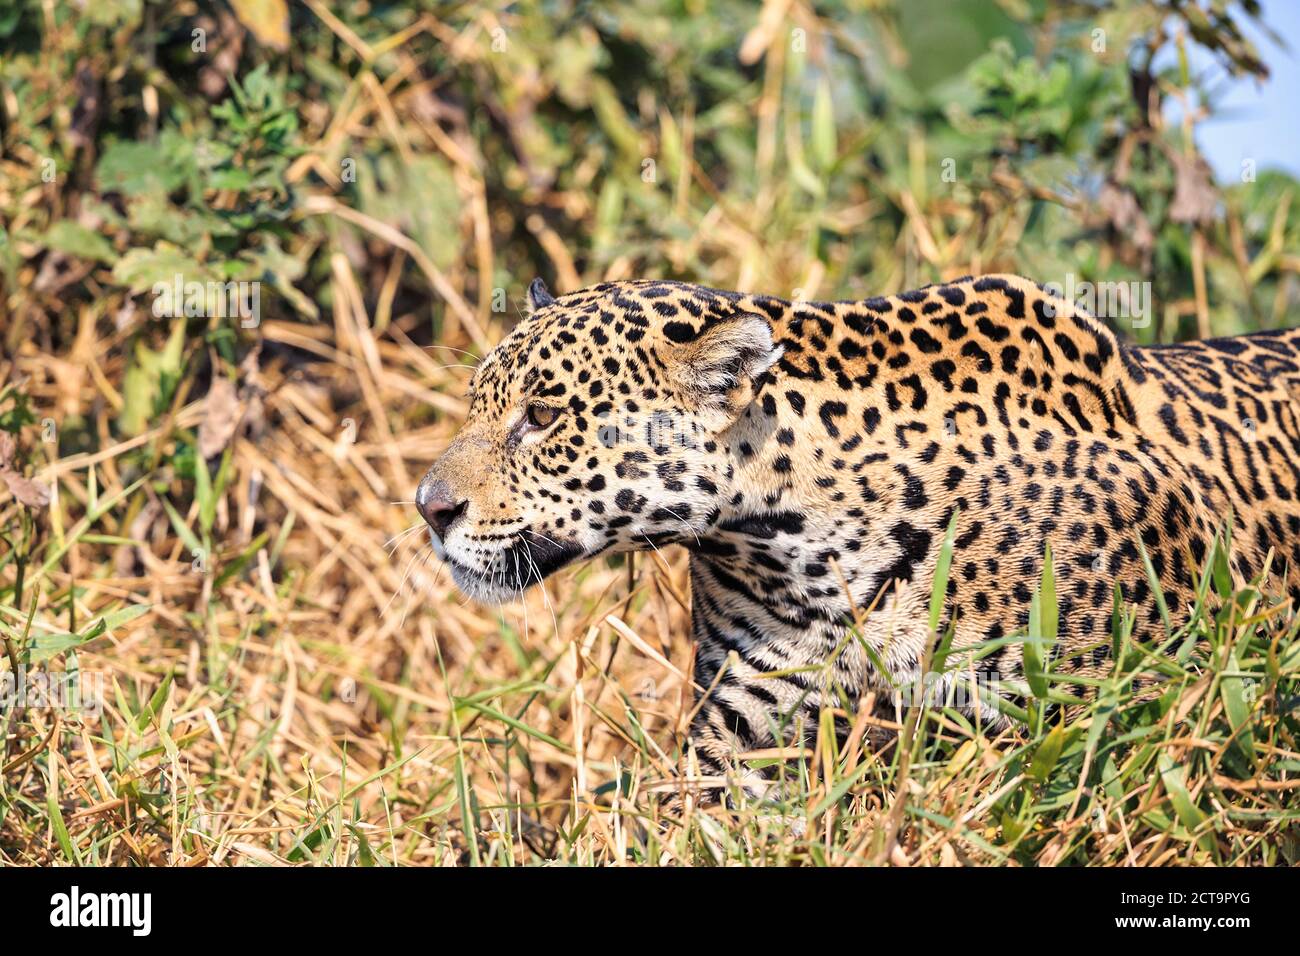 South America, Brasilia, Mato Grosso do Sul, Pantanal, Jaguar, Panthera onca Stock Photo